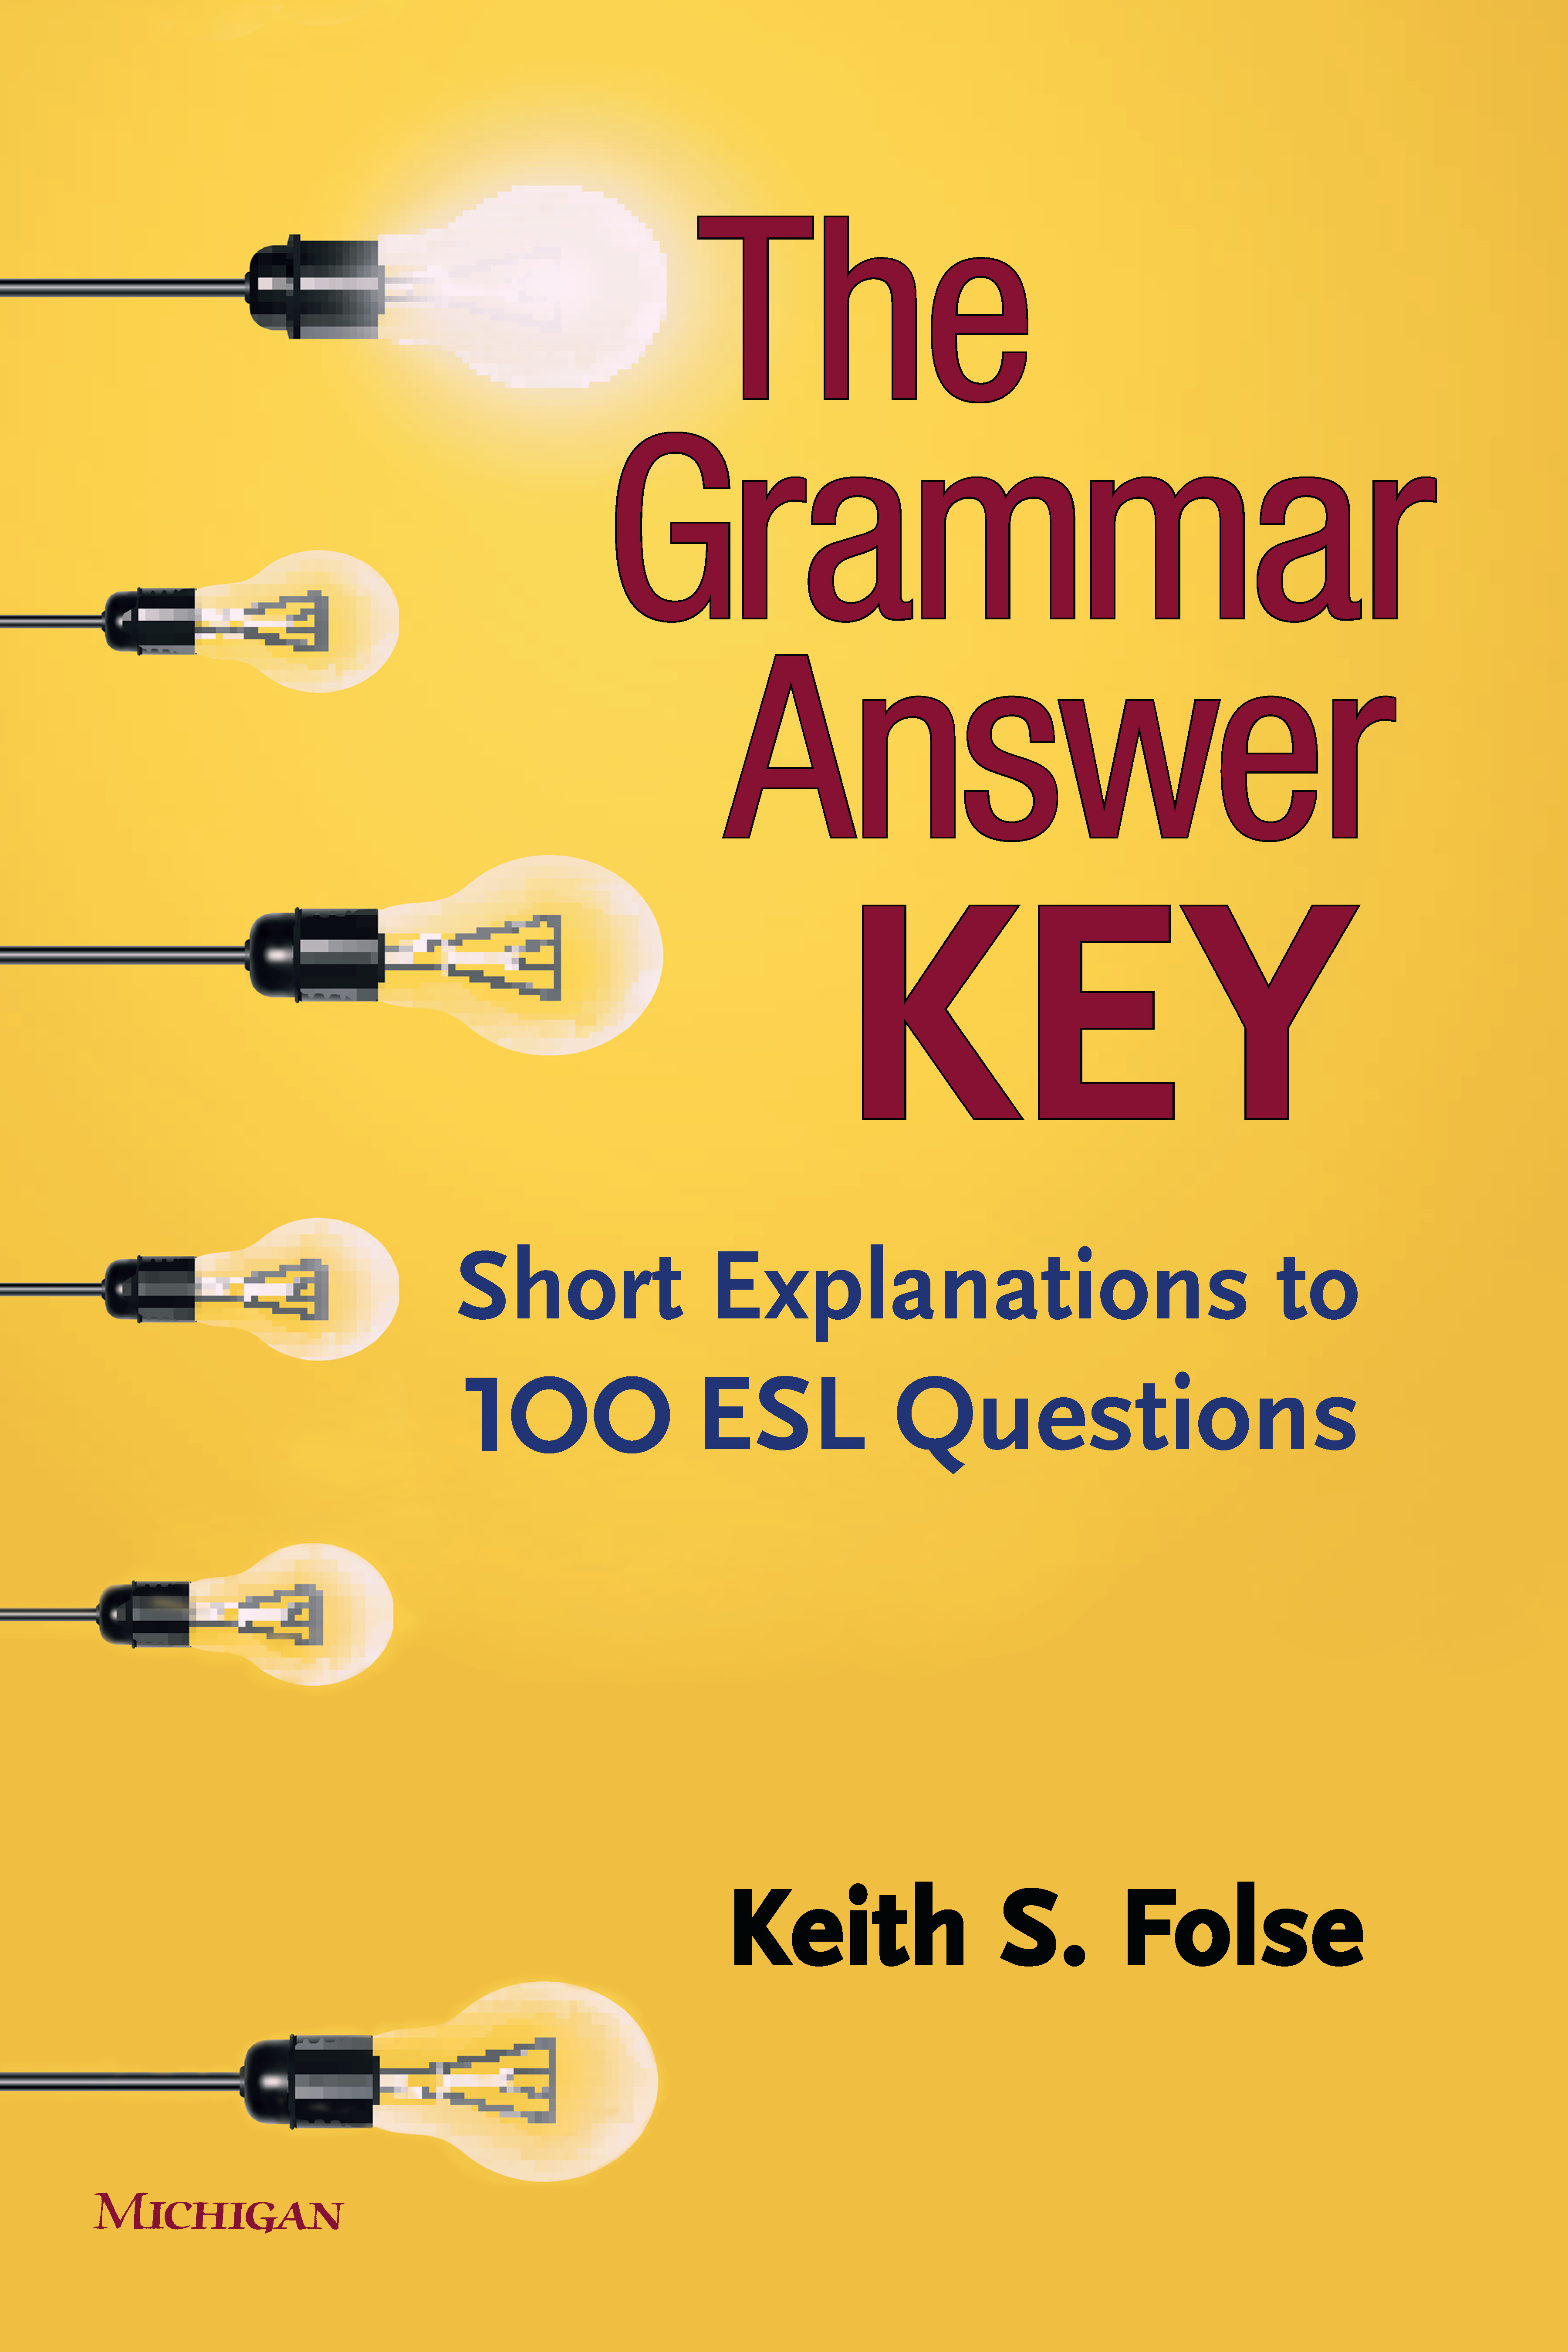 Workbook for Keys to Teaching Grammar to English Language Learners